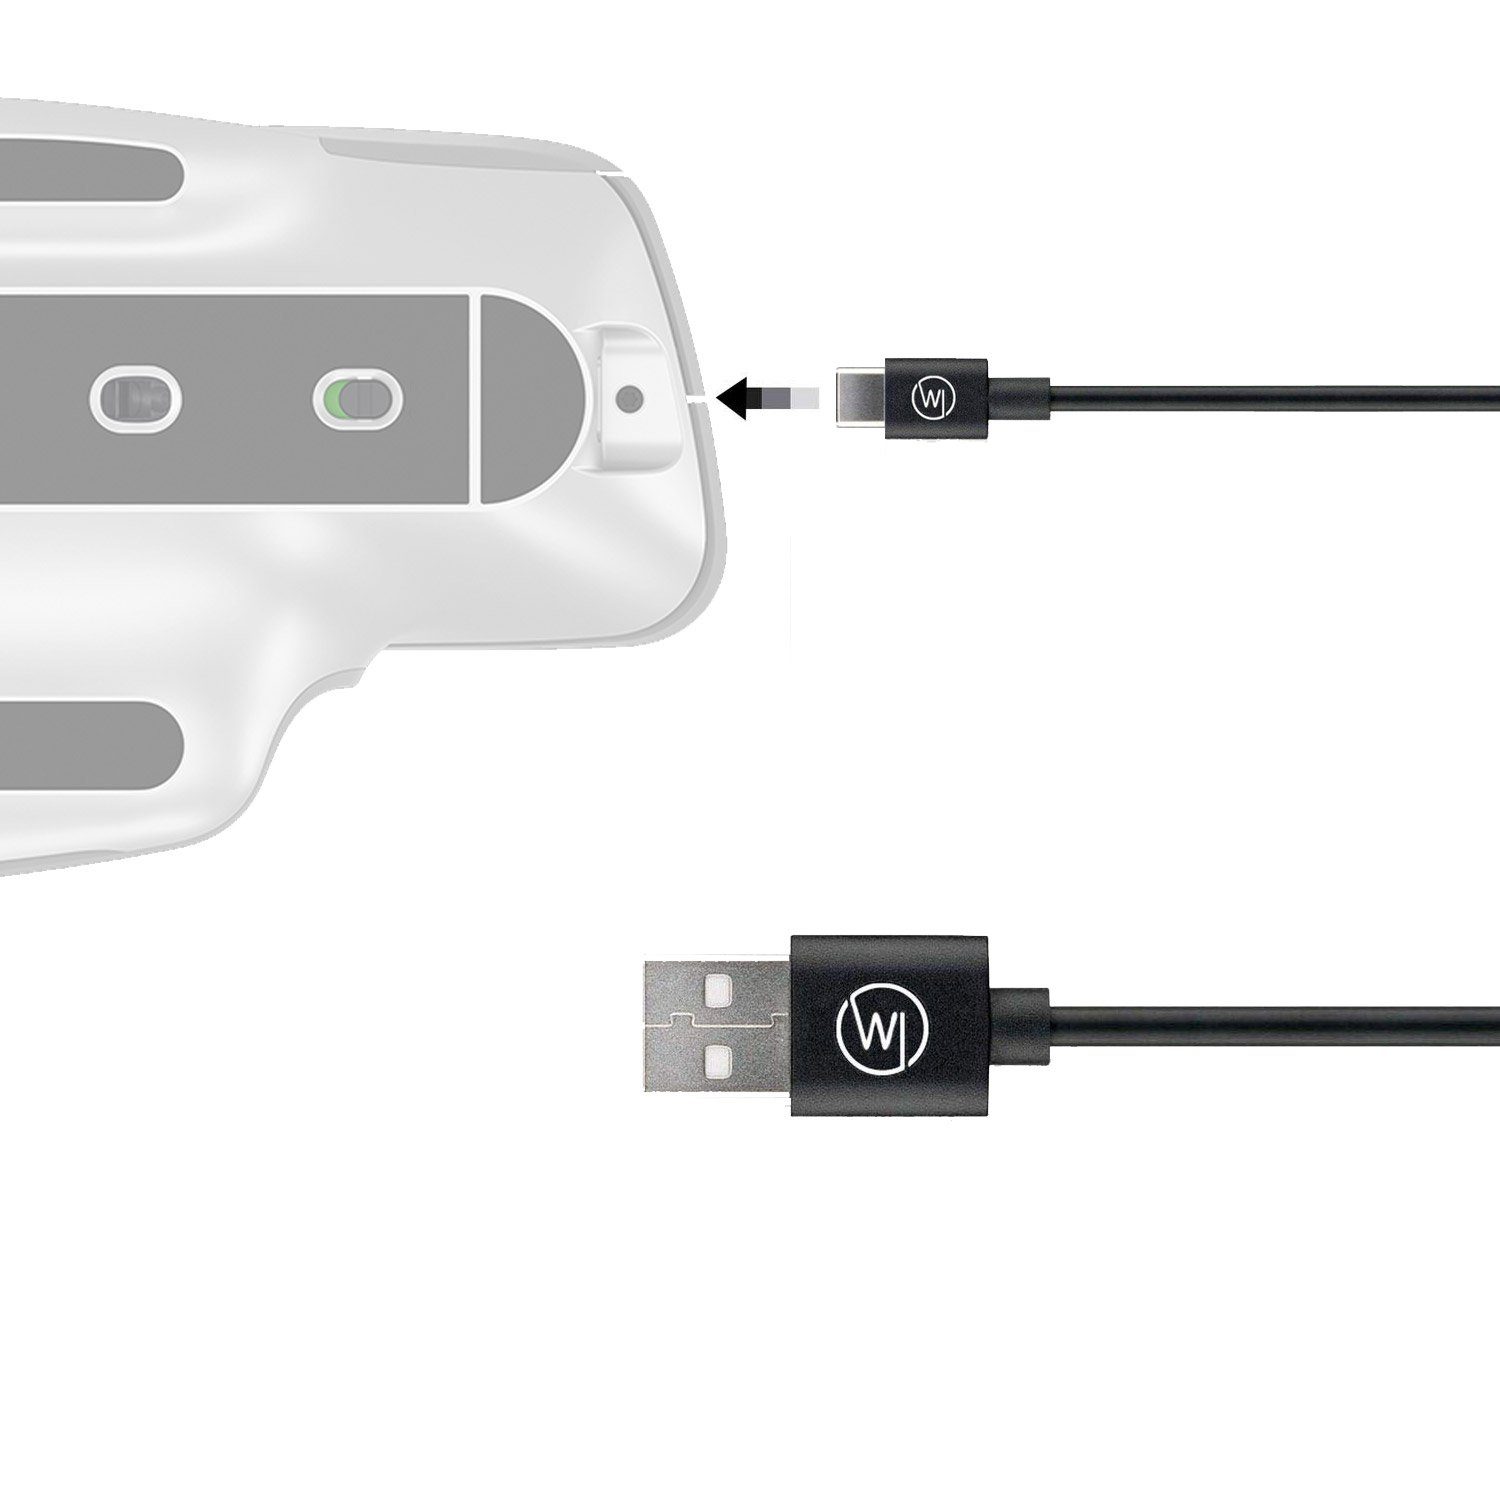 Wicked Chili USB-C Kabel für Logitech MX Master 3 und MX Keys Gaming-Controllerkabel, USB-C, USB-A (100 cm), 3A / 5V / 15 W Fast Charge, Universal kompatibel mit Handy, Smartphone